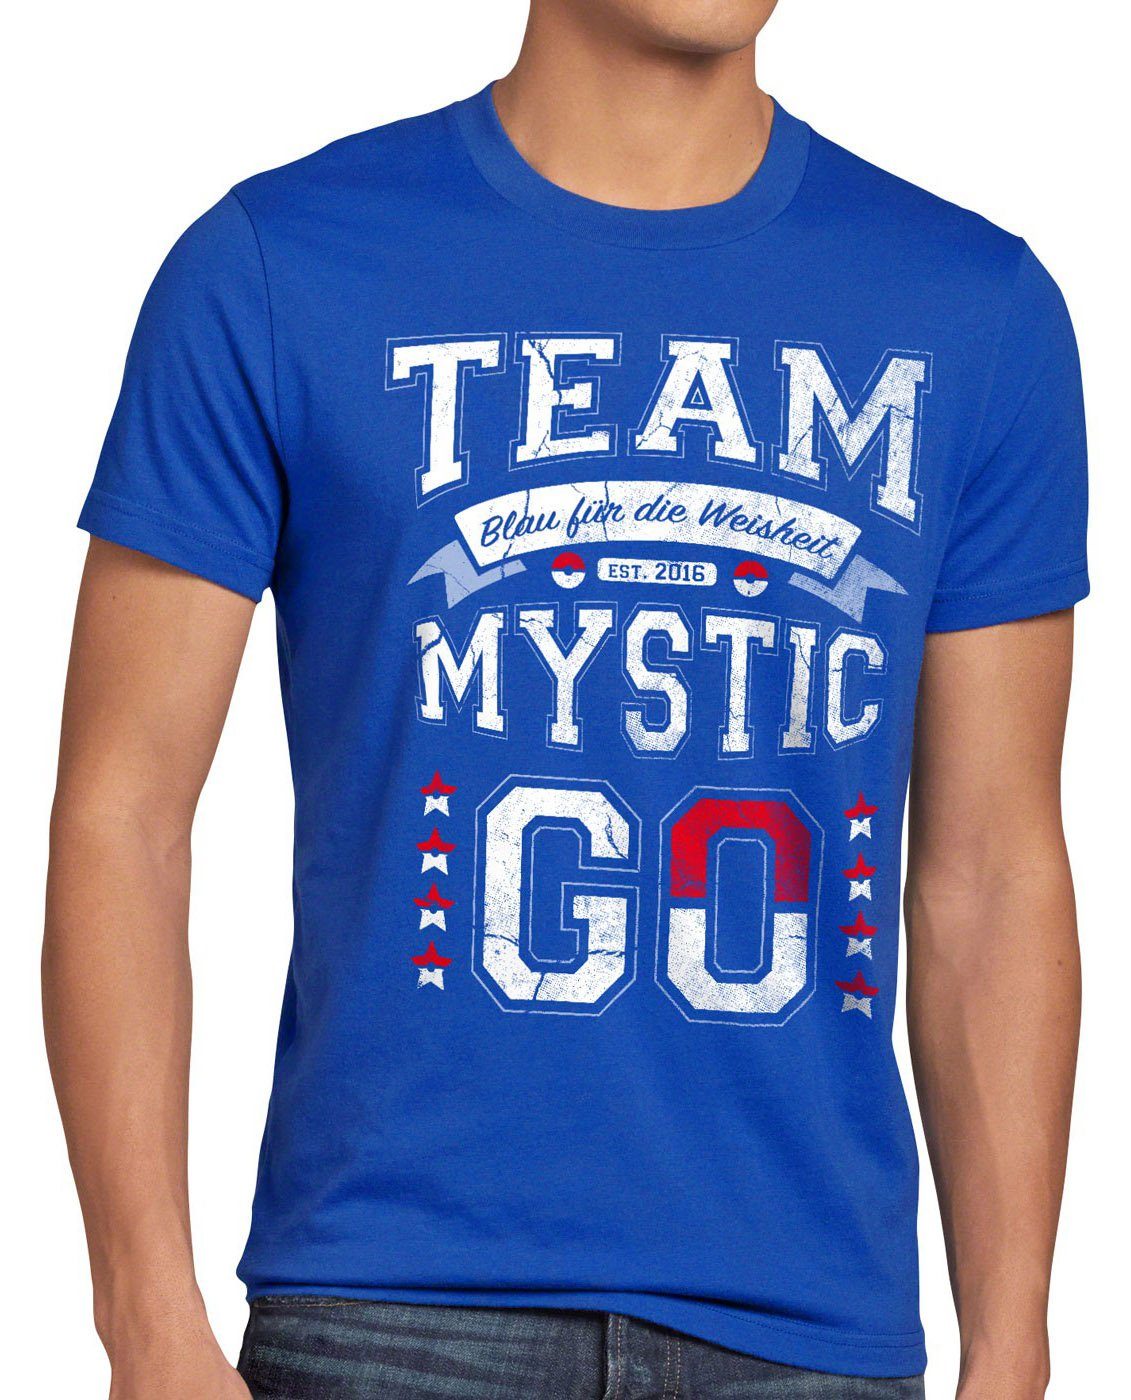 style3 Print-Shirt Herren T-Shirt Team em Weisheit poke go catch arena spiel Mystic ball app Blau